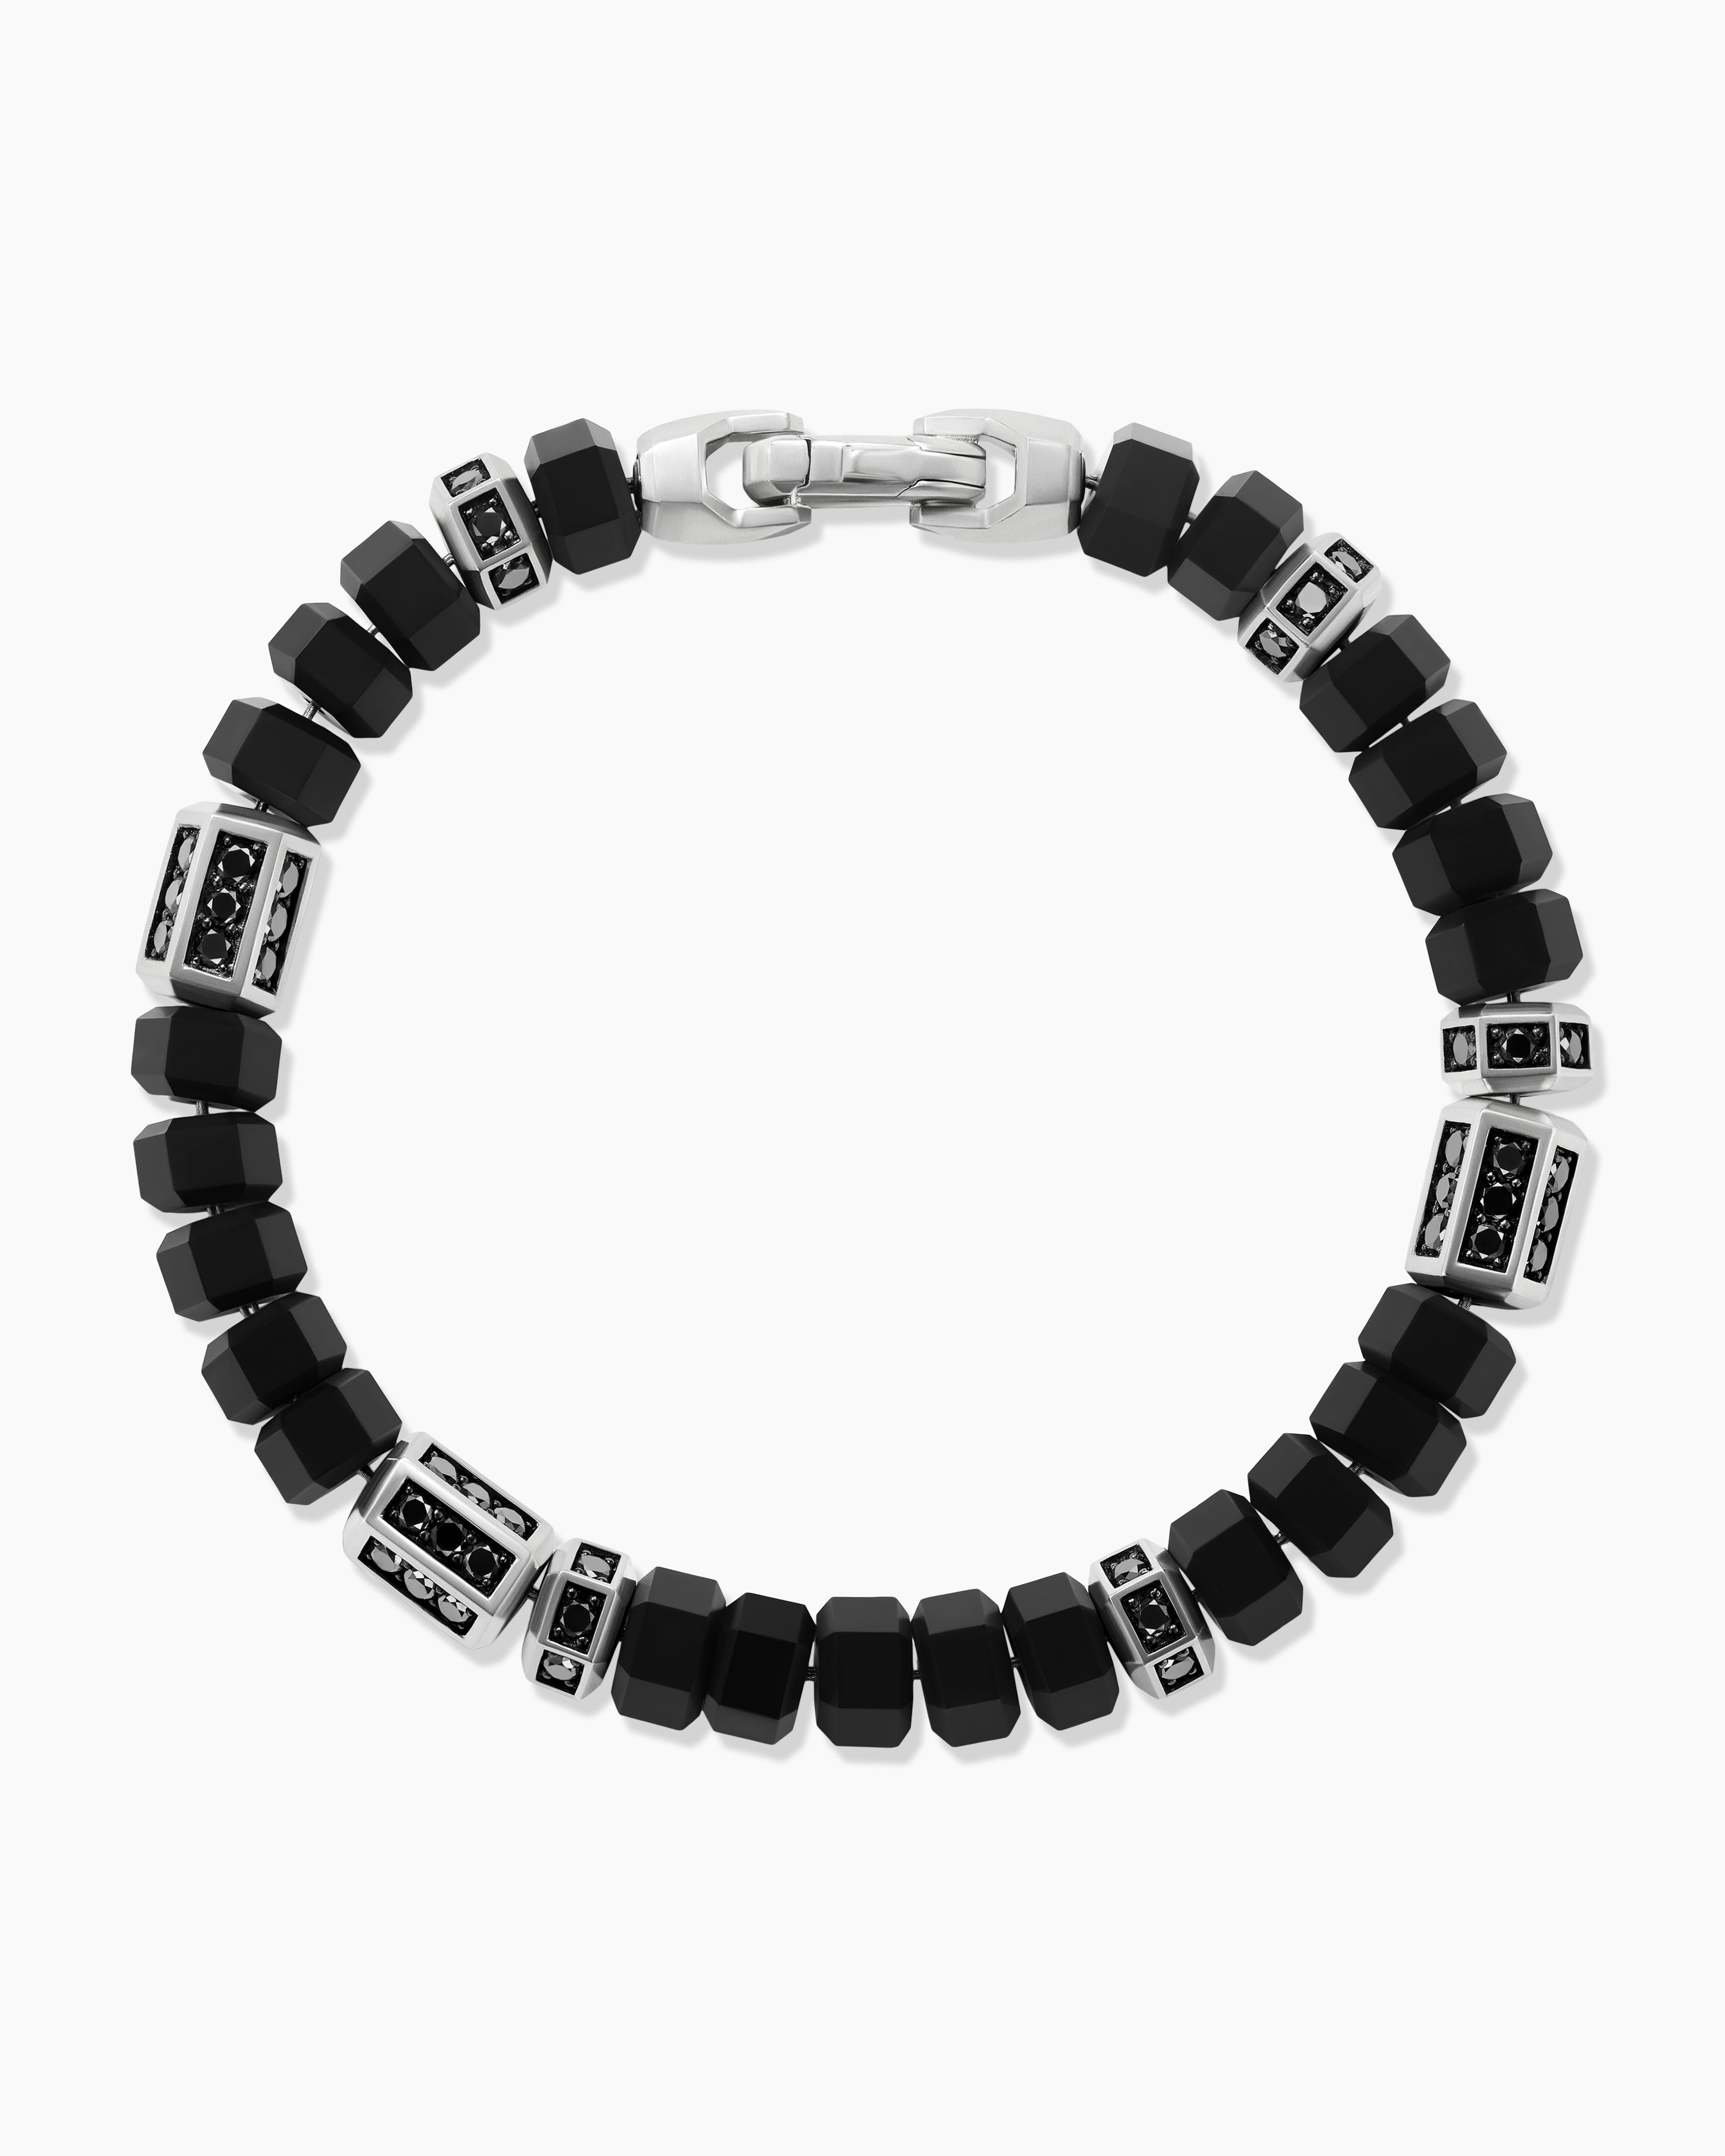 Emporio Armani Black Onyx Beaded Bracelet - EGS3030001 - Watch Station